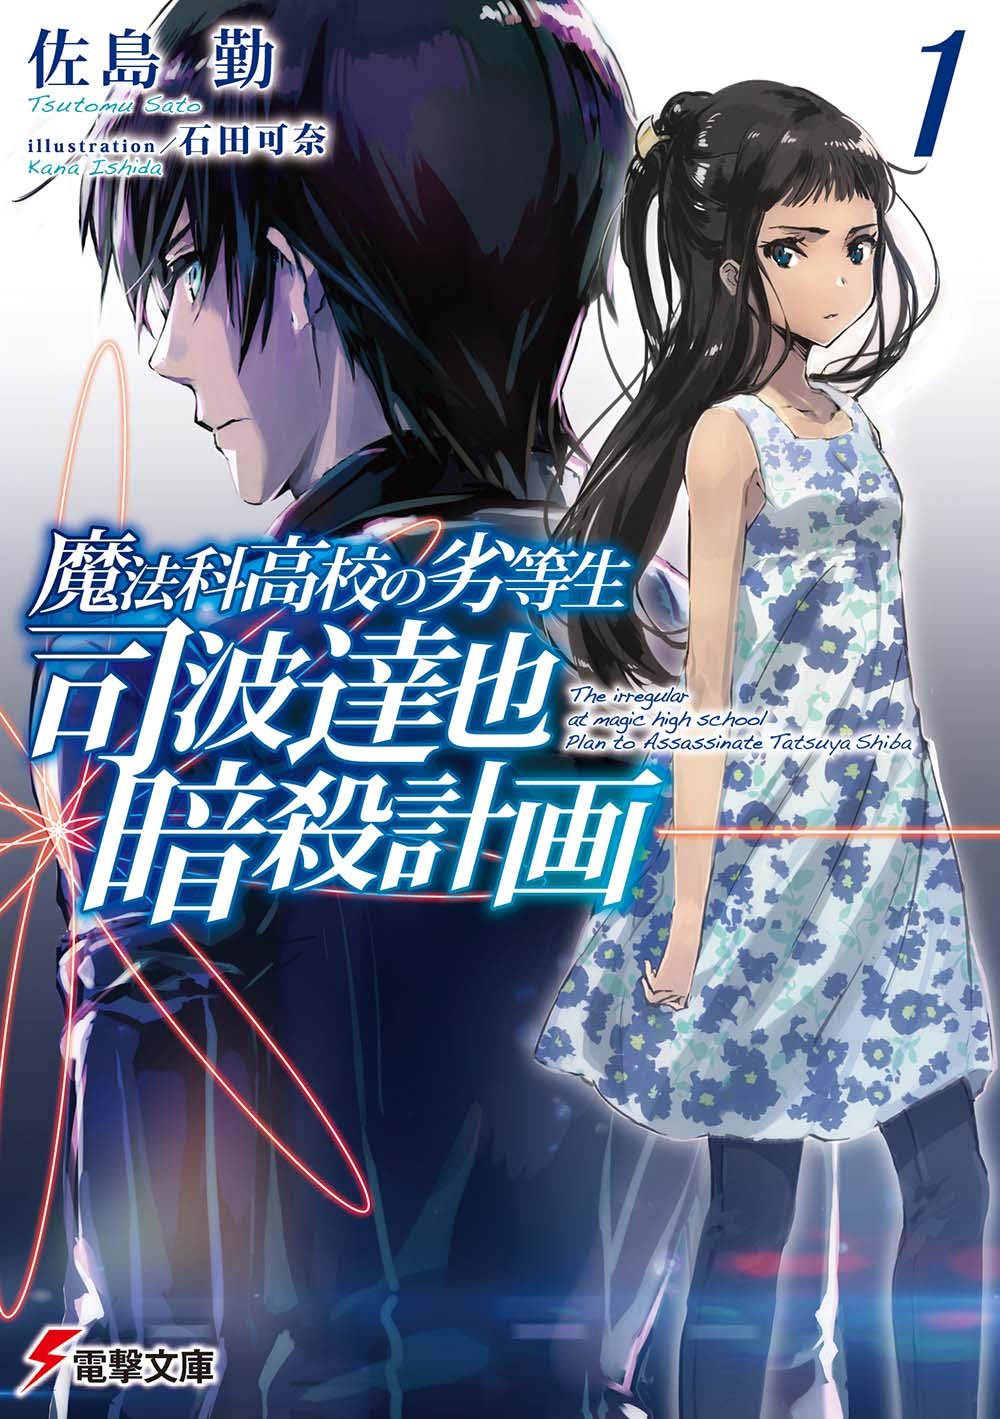 ZeroDS. on Twitter: "Mahouka Koukou no Rettousei: Assassination of Shiba (Light Novel) Vol.1 – October 10, https://t.co/rqhCaLxBxH" / Twitter